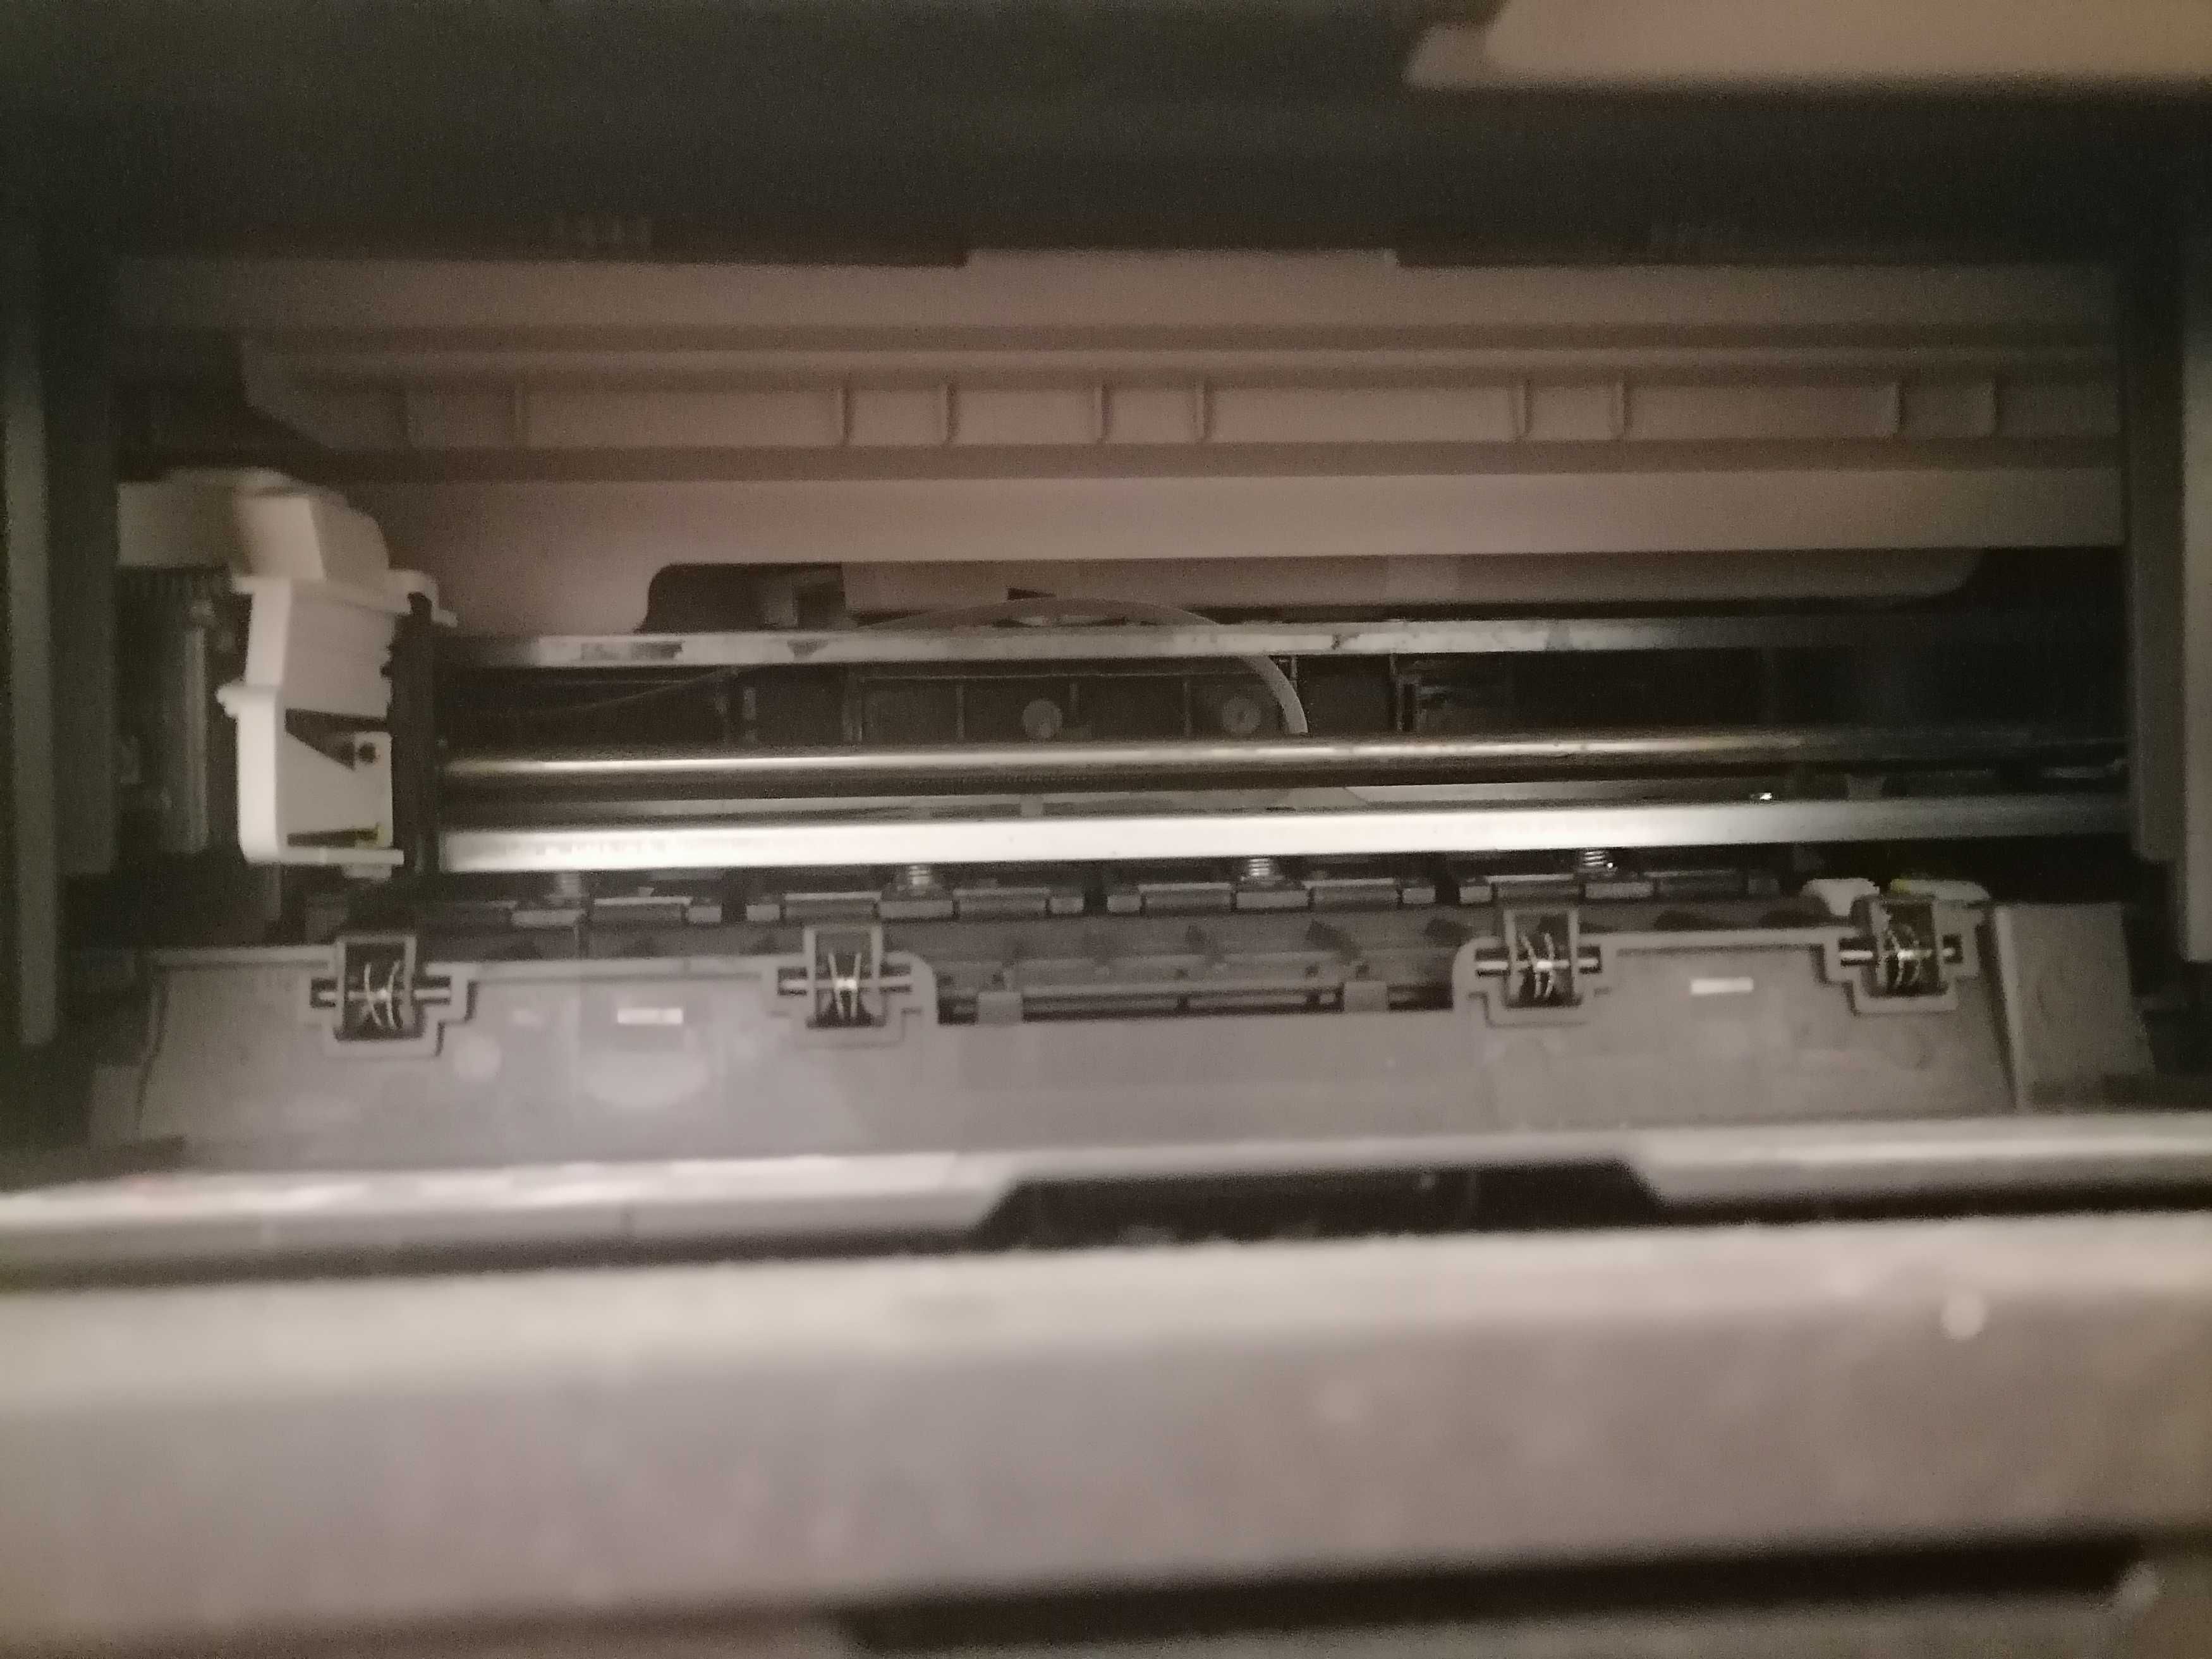 Impressora HP vendo